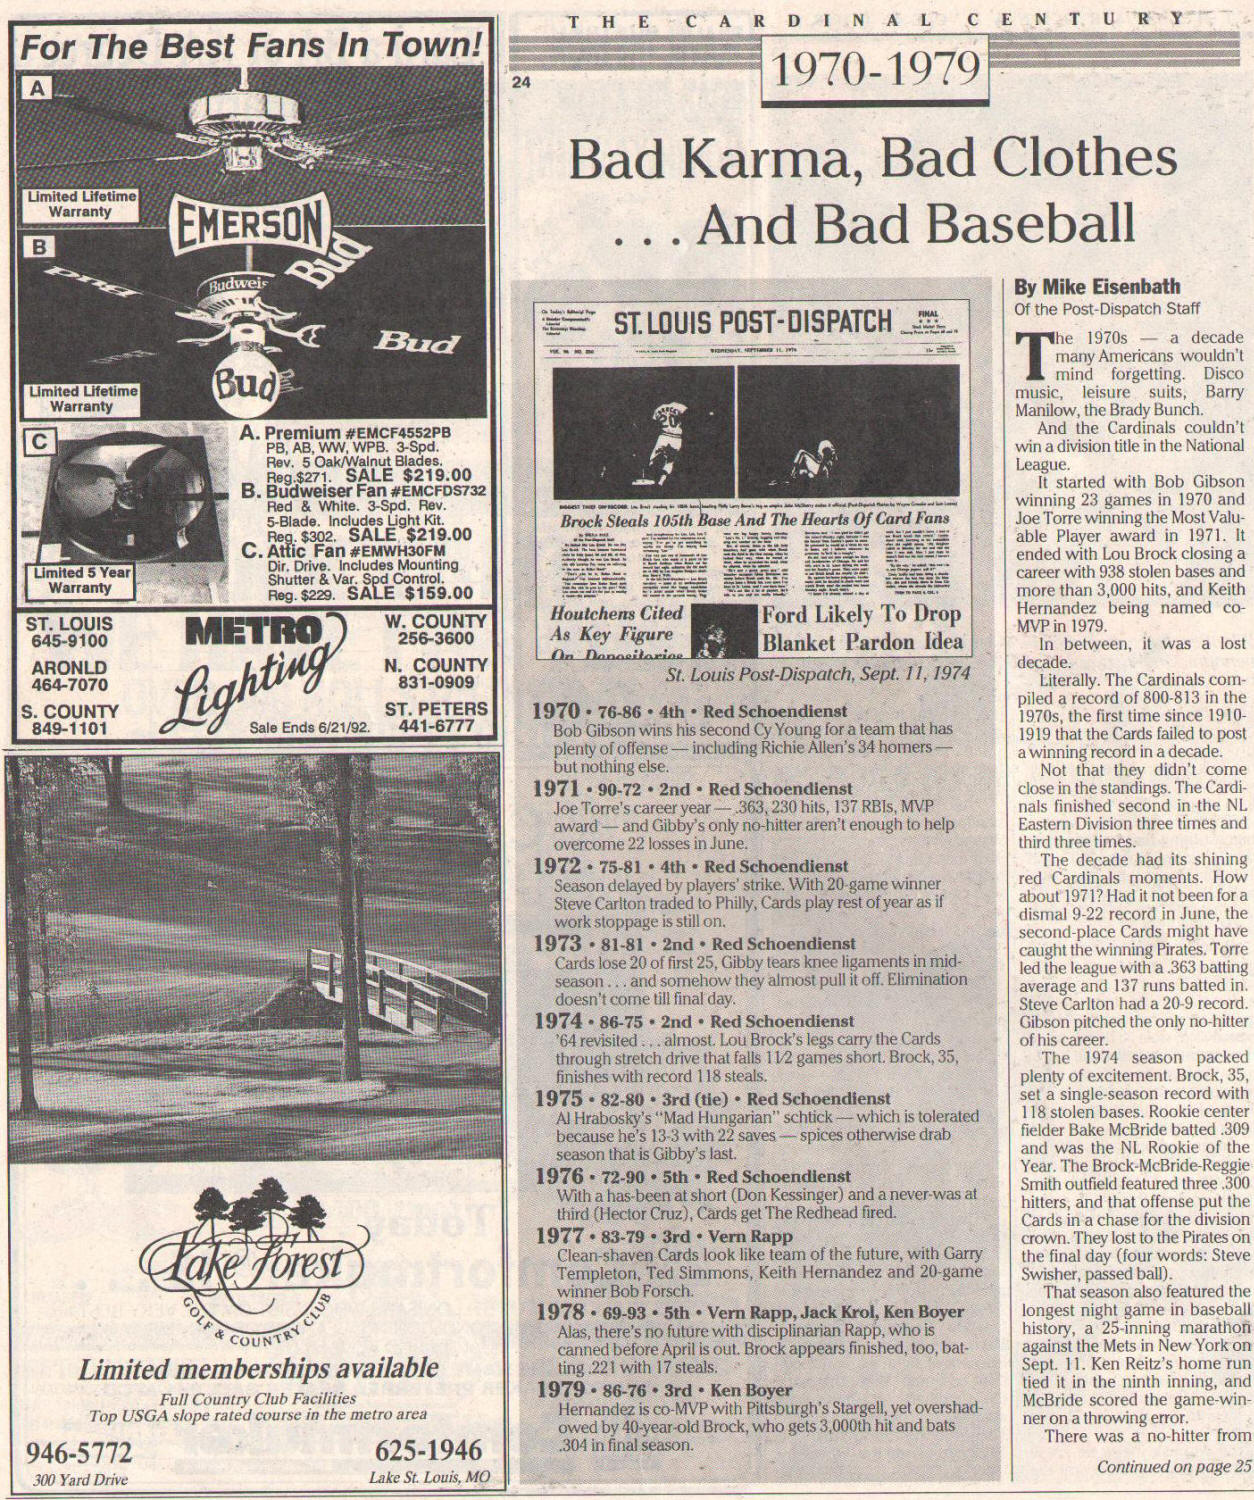 1992 St. Louis Post-Dispatch 100th Anniversary Souvenir Edition (6/7/92)